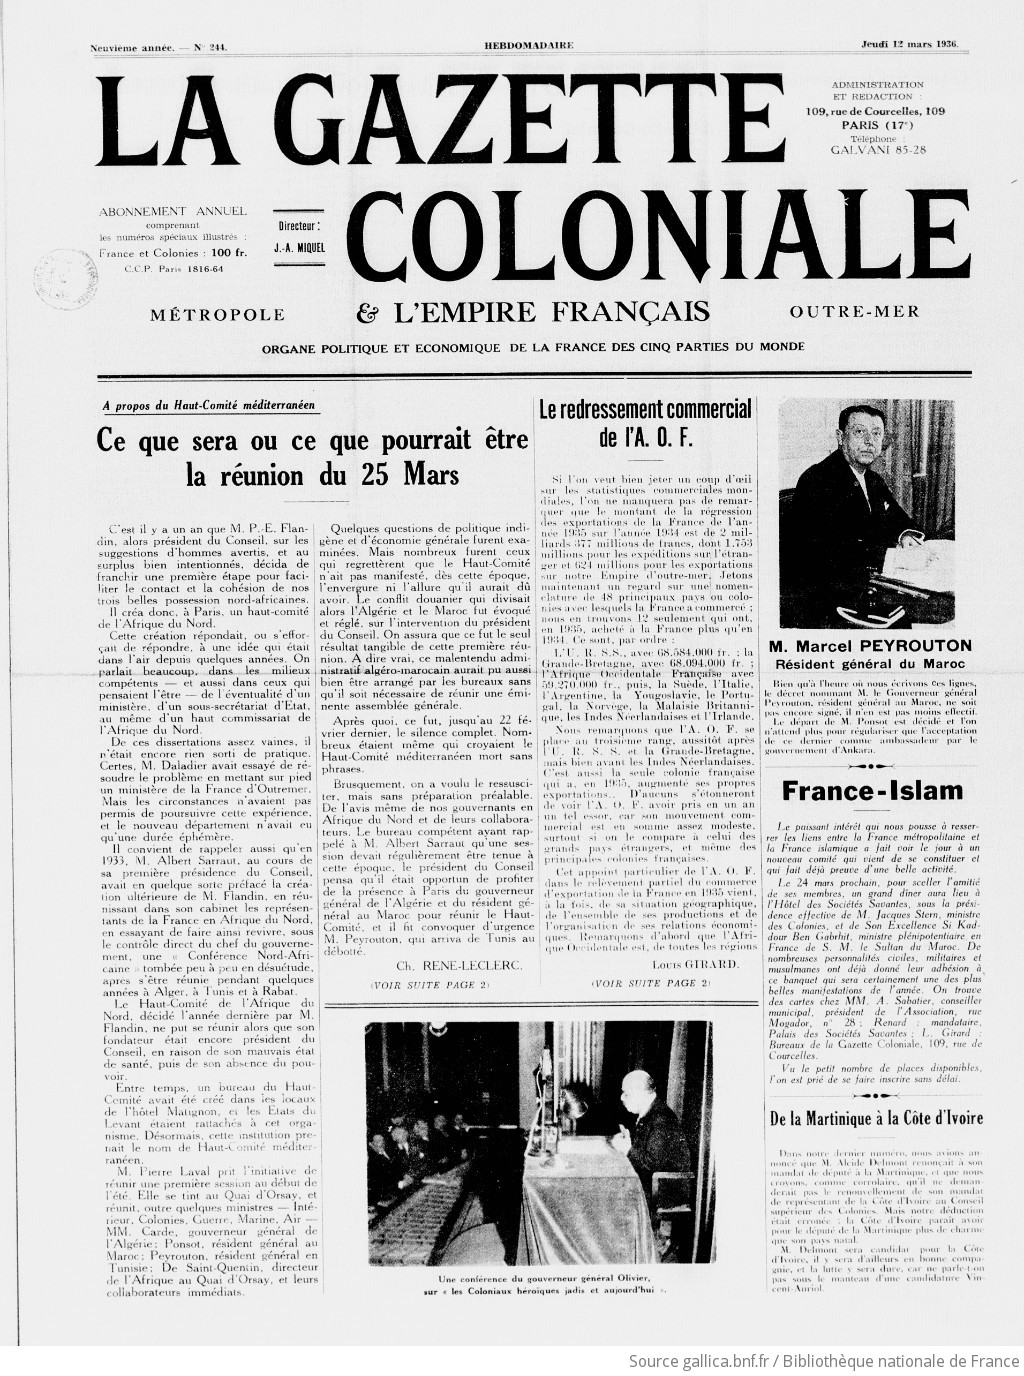 La Gazette coloniale [